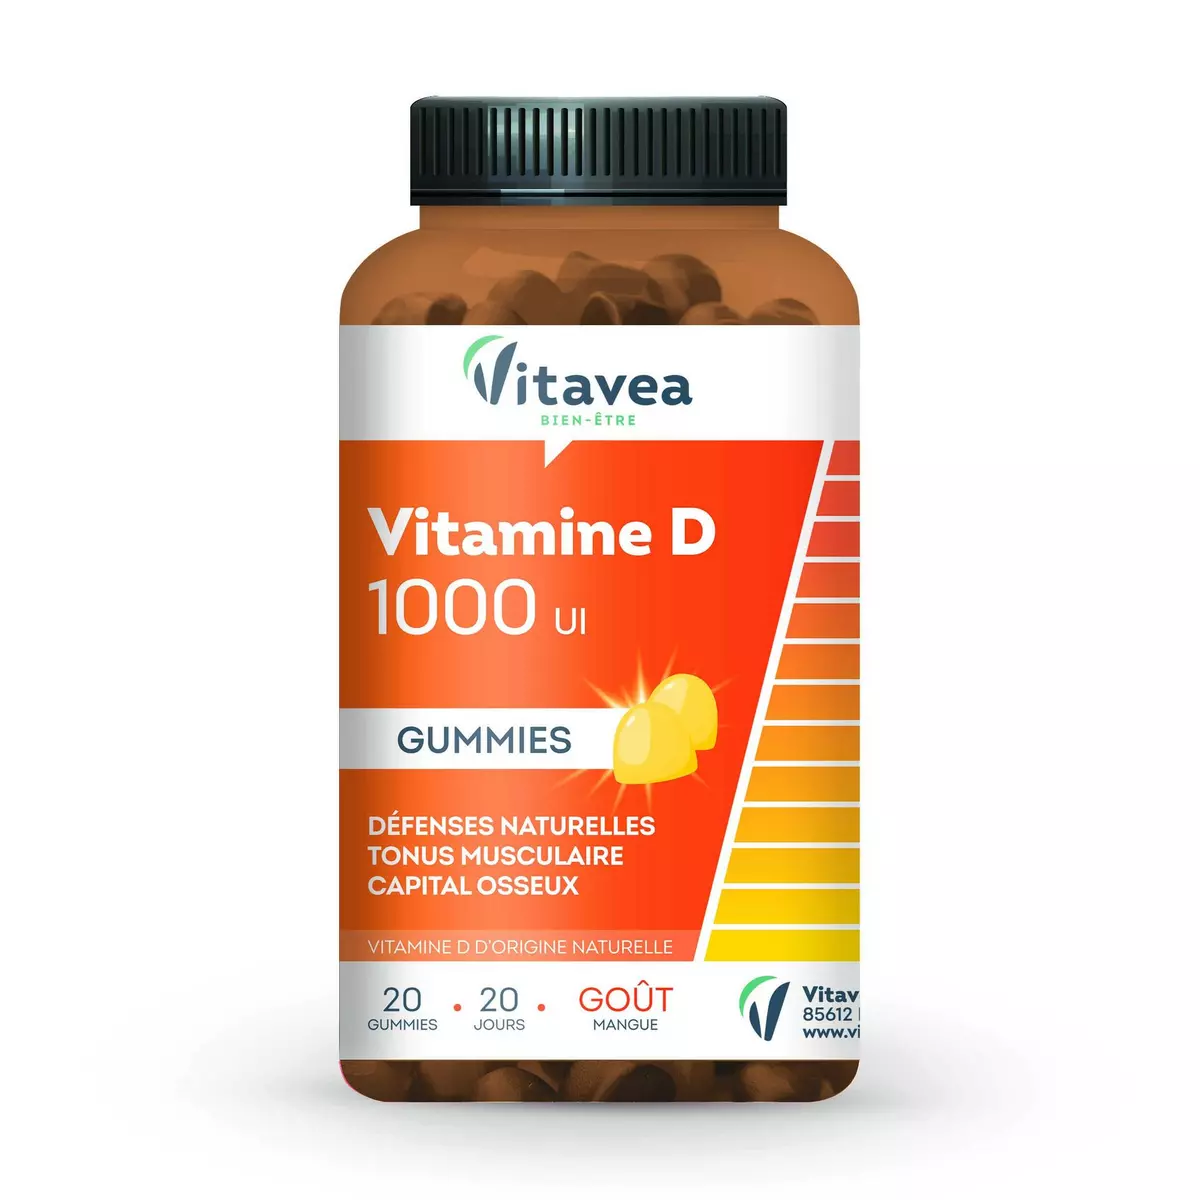 VITAVEA Gummies vitamine D goût mangue 20 jours 20 gummies